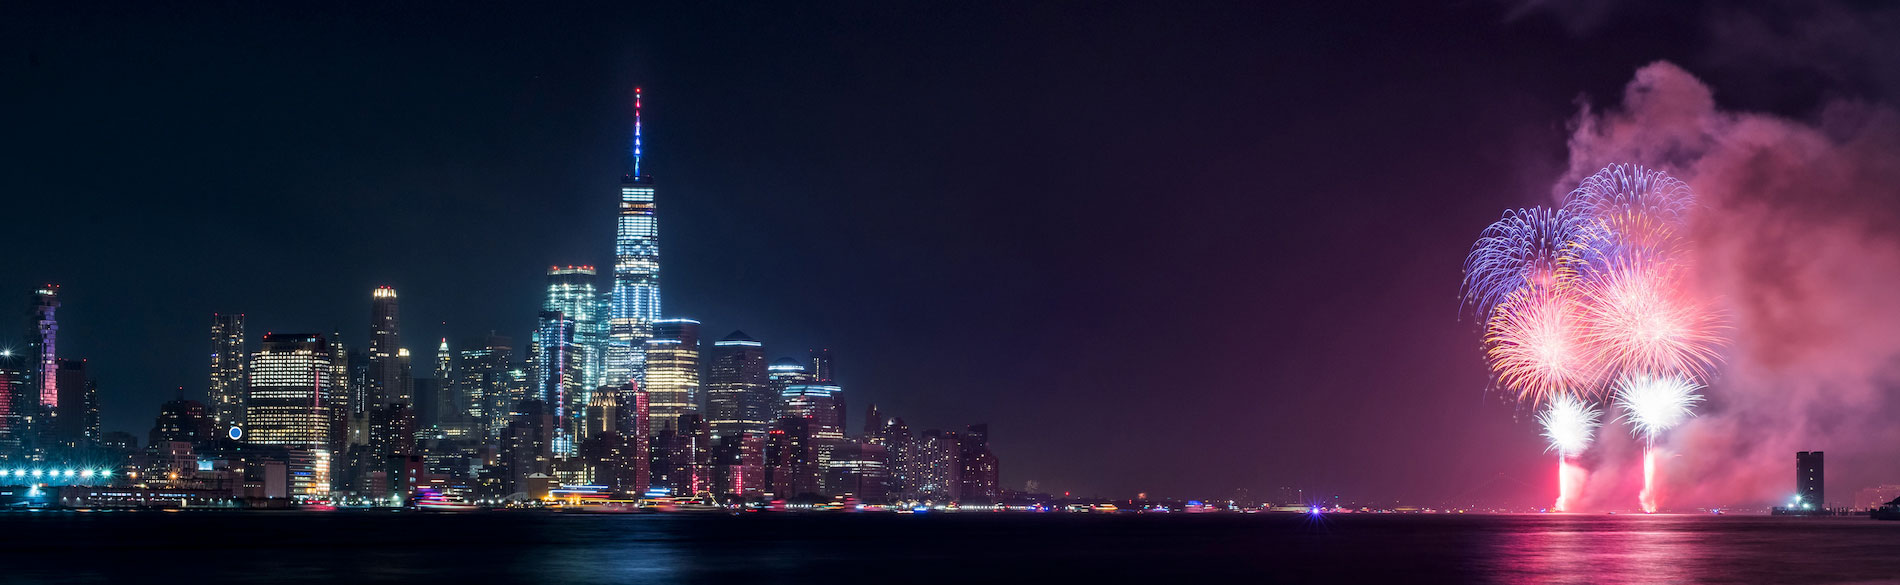 NYC Feuerwerk Skyline